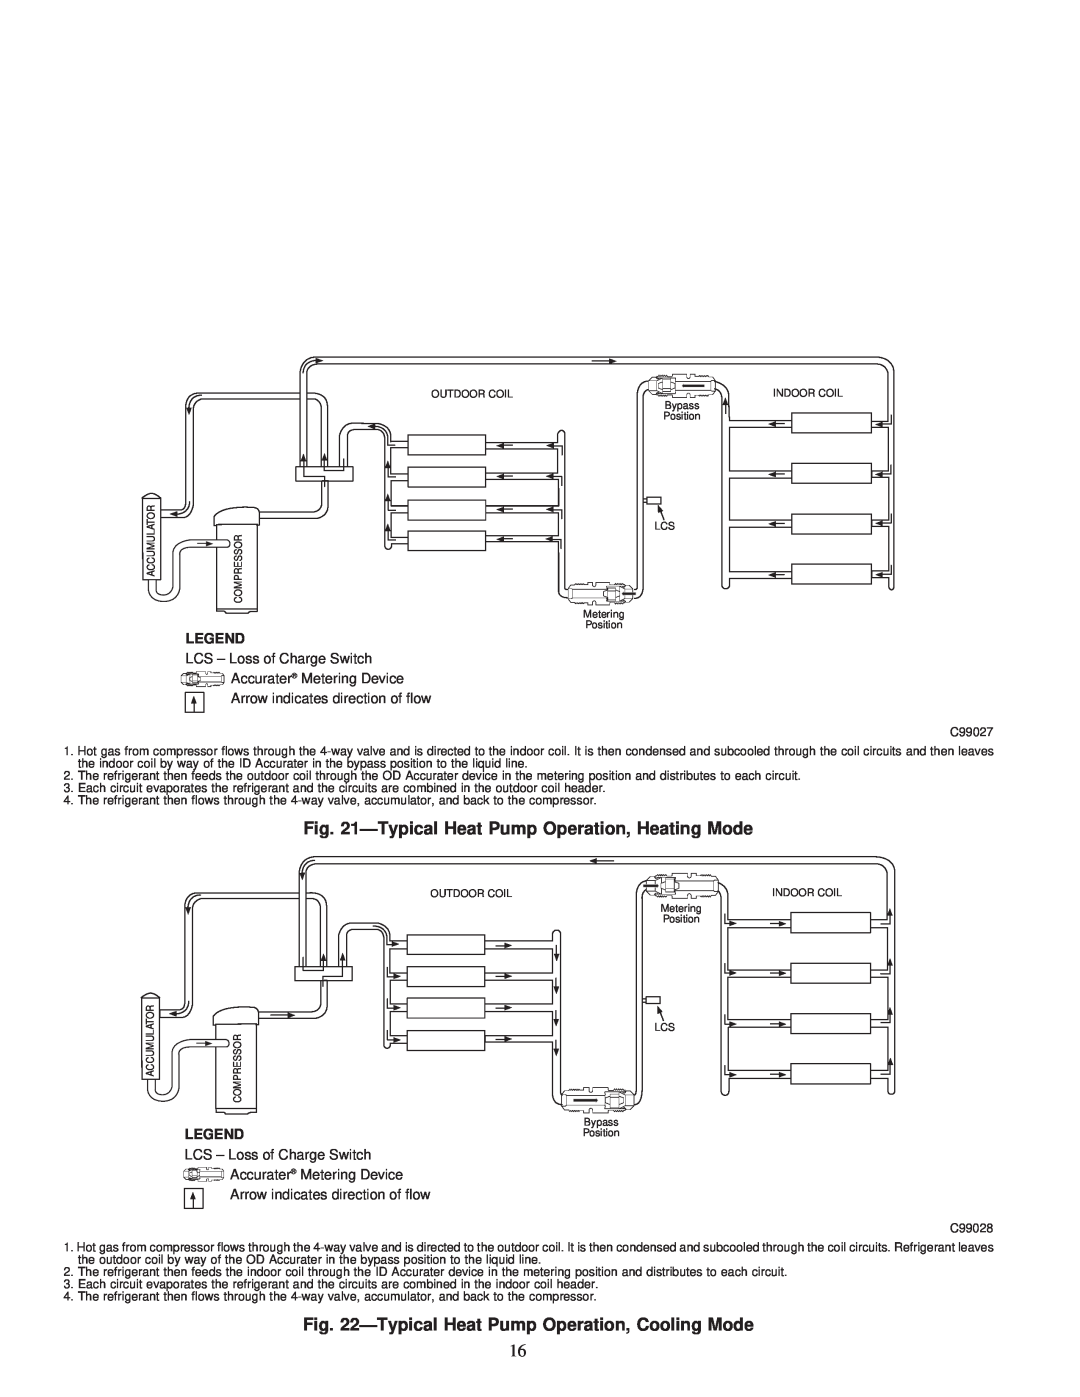 Carrier 50JS instruction manual ÐTypical Heat Pump Operation, Heating Mode, ÐTypical Heat Pump Operation, Cooling Mode 